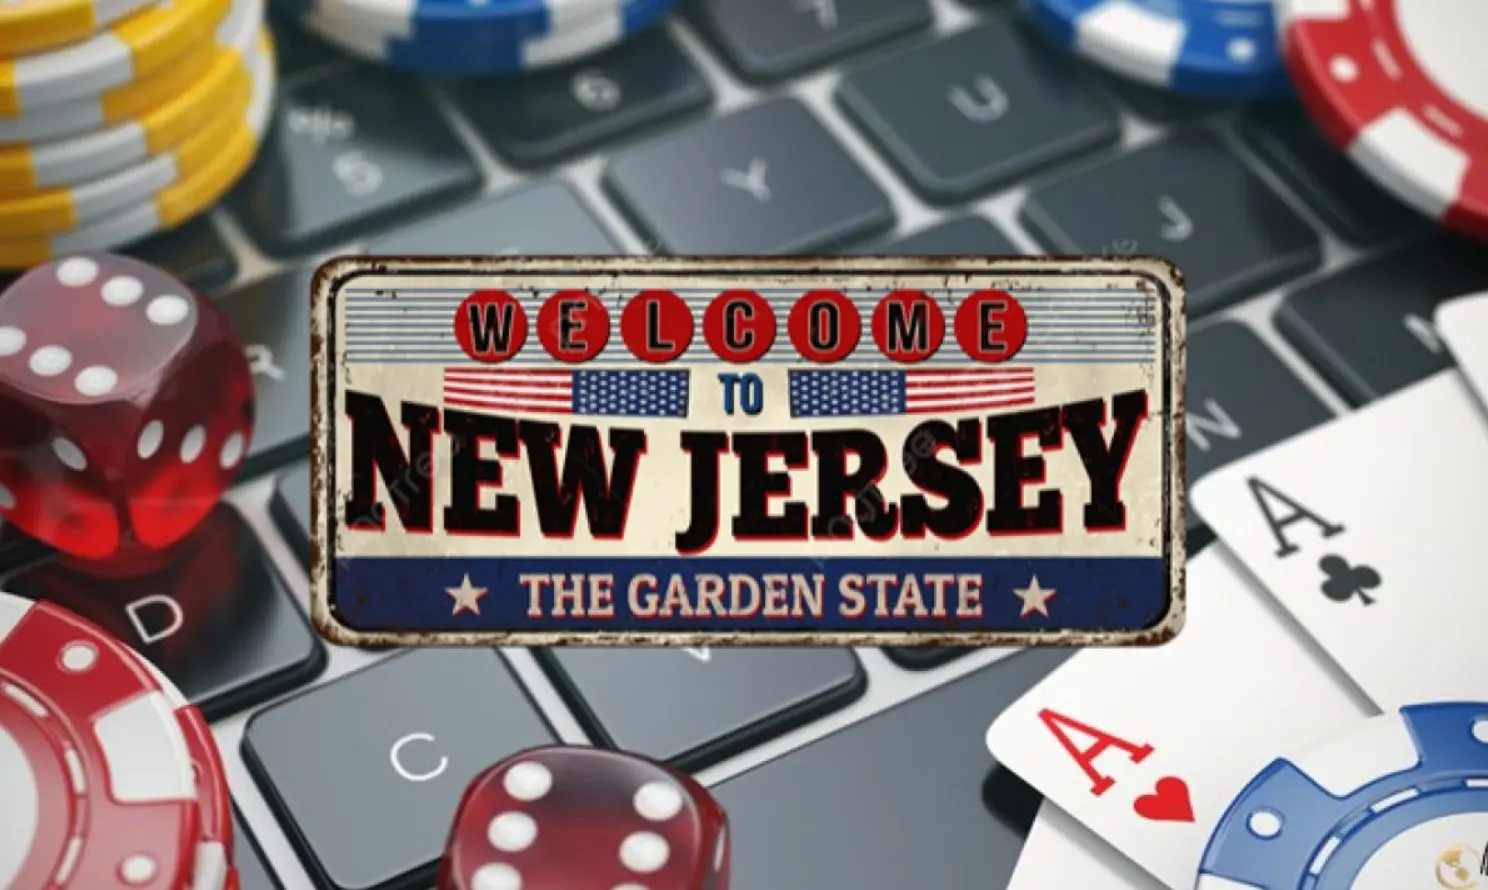 New Jersey jatekpiaca rekord teljesitmenyt mutat novemberben jpg